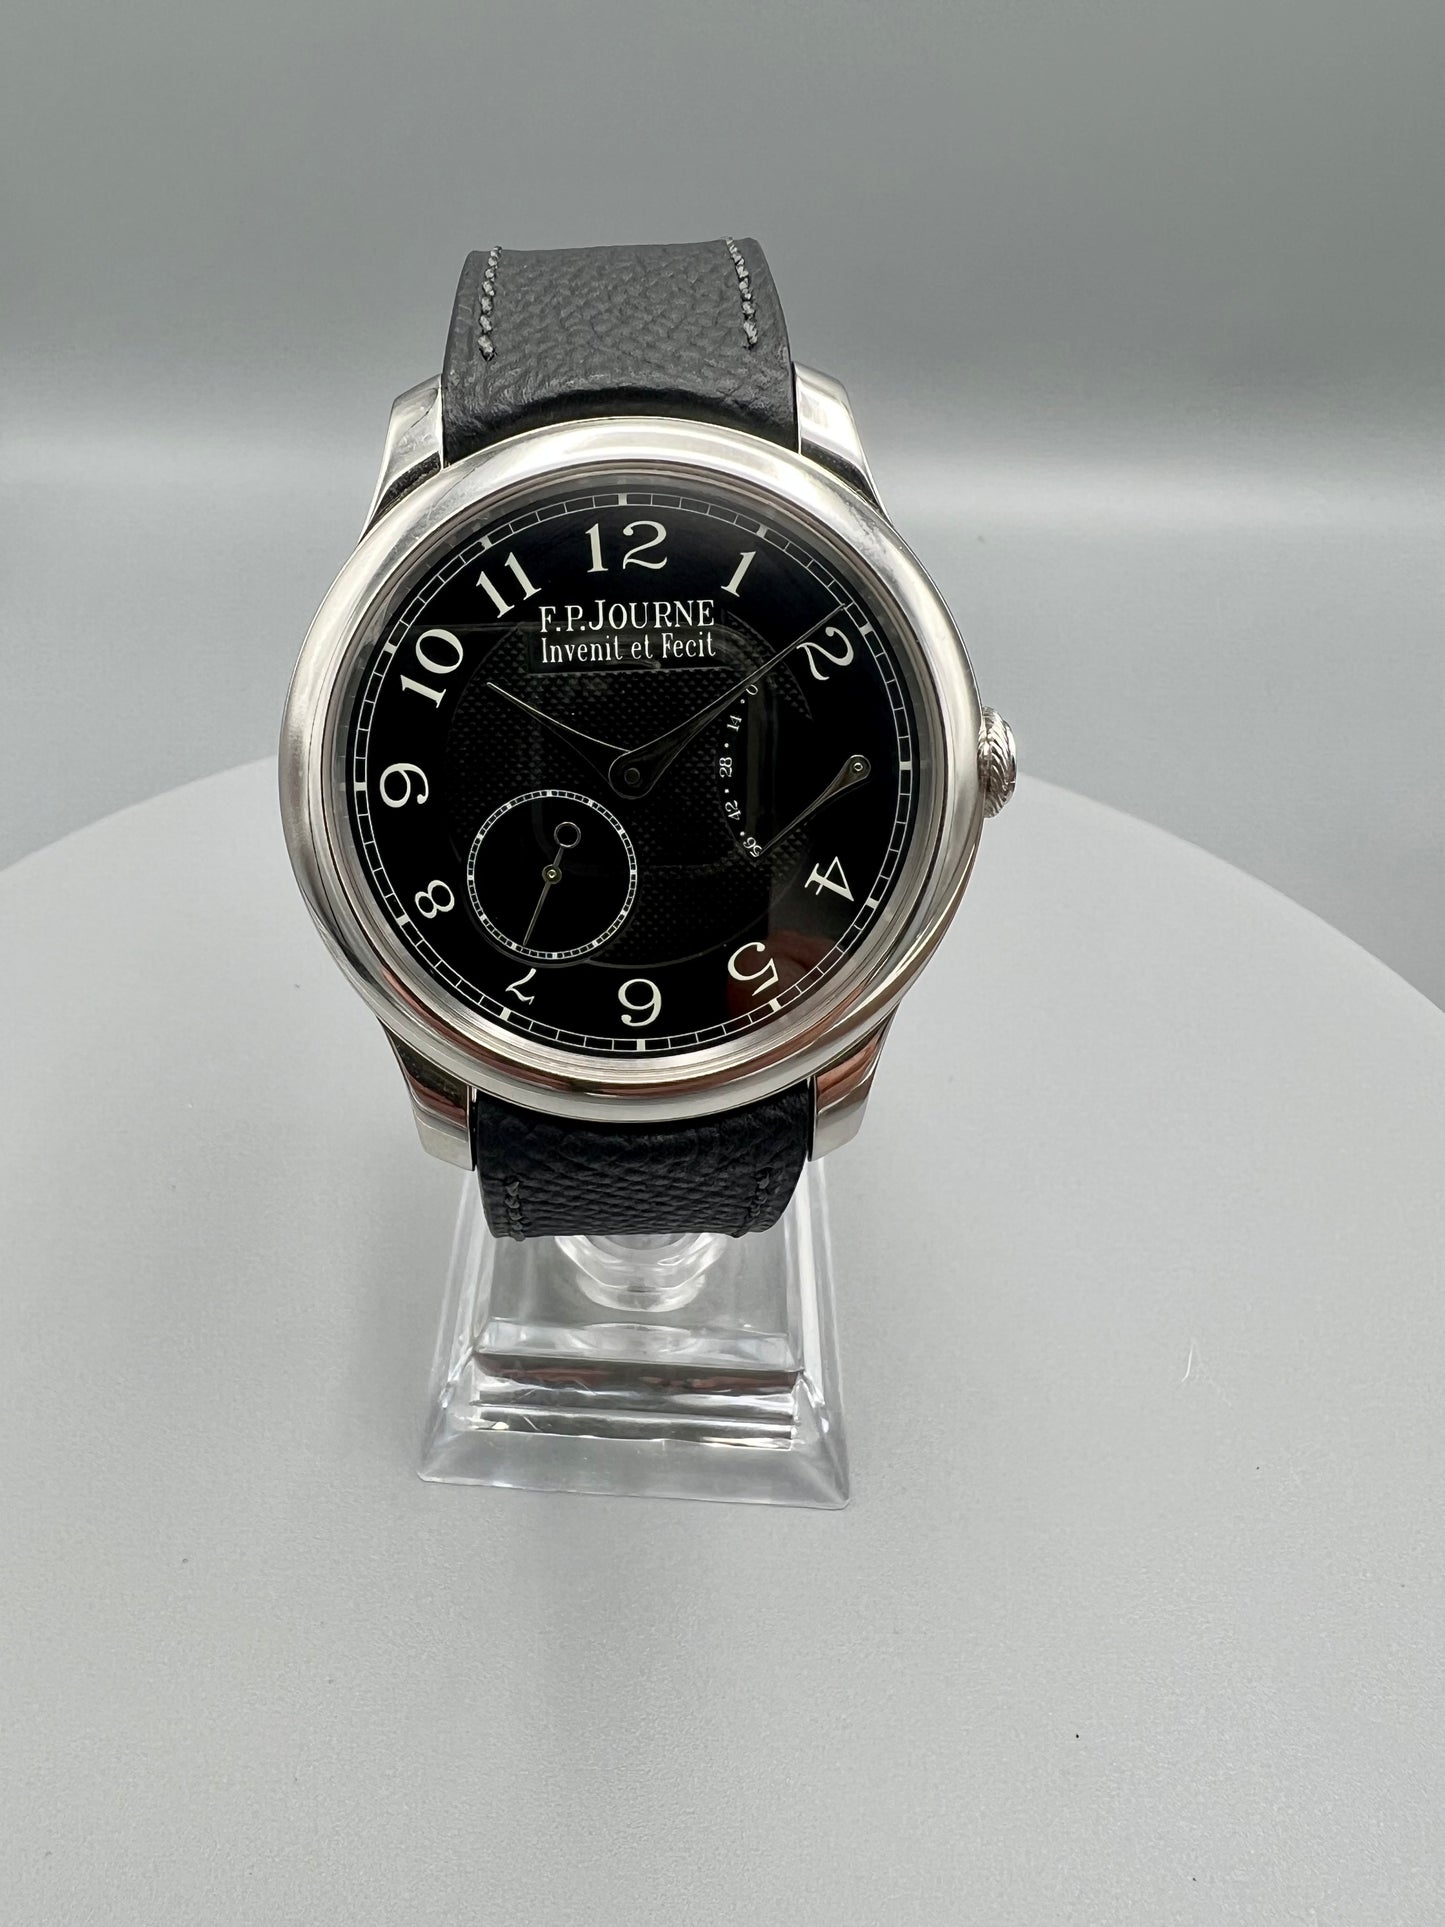 FP Journe Chronometre Souverin Cal 1304 Black Label, Platinum, Rare and Discontinued